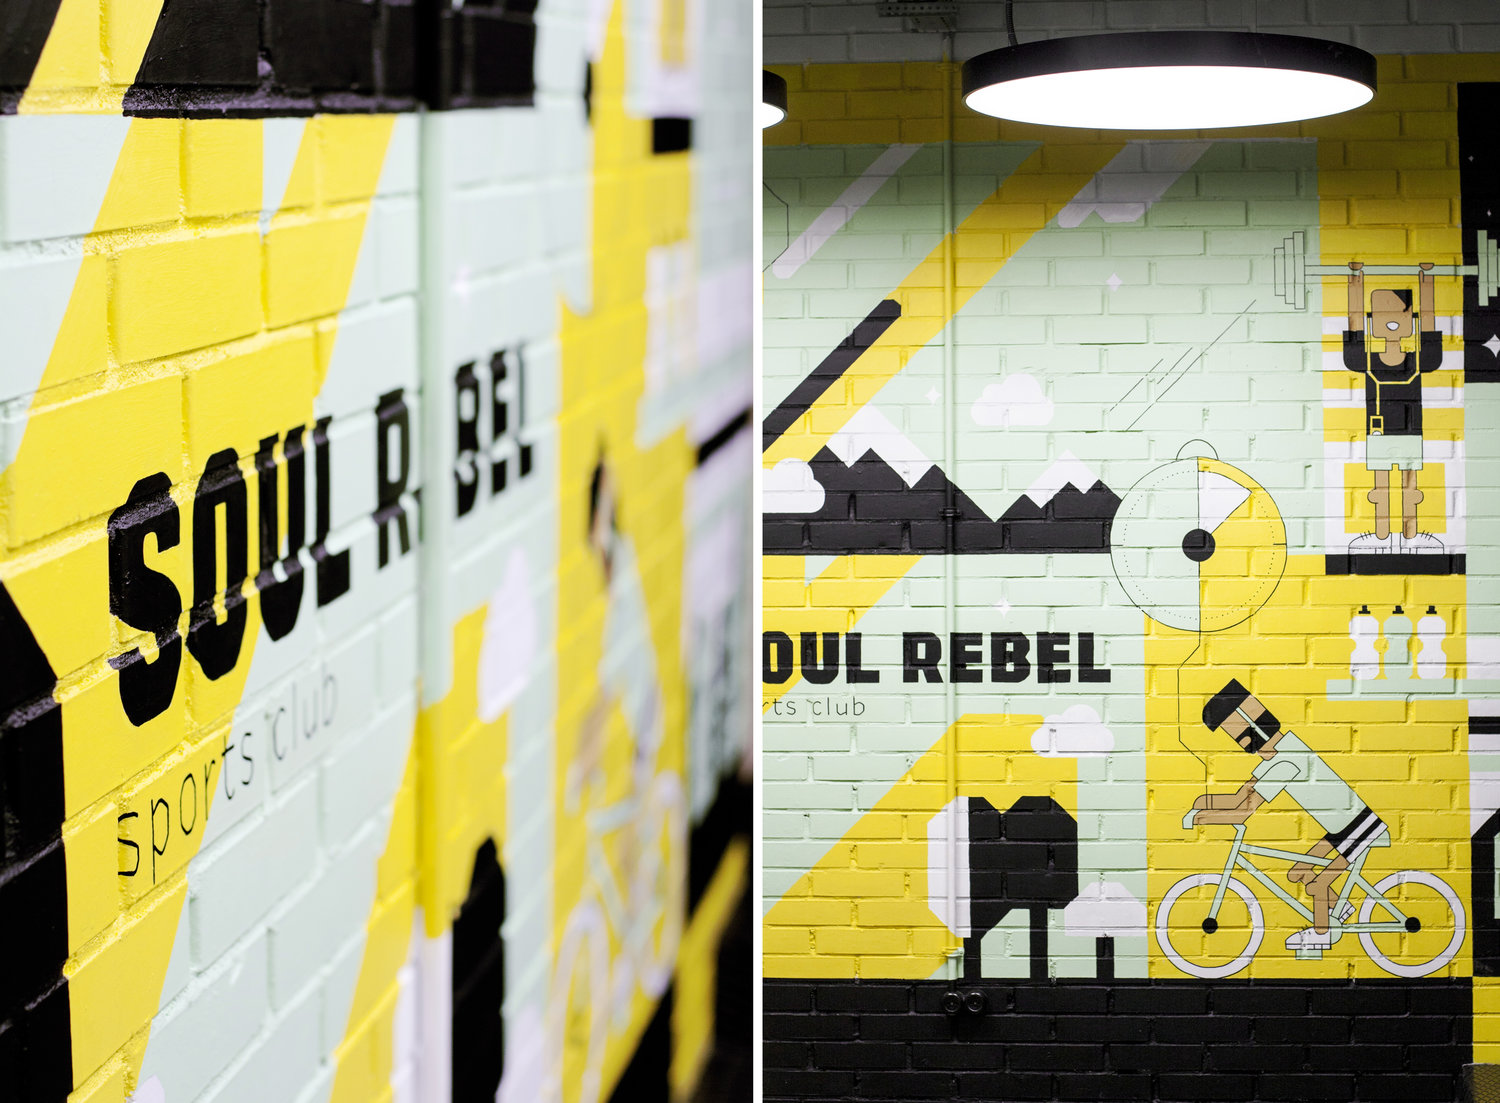 Soul Rebel 运动俱乐部标识系统设计©CHEMERIS POLINA